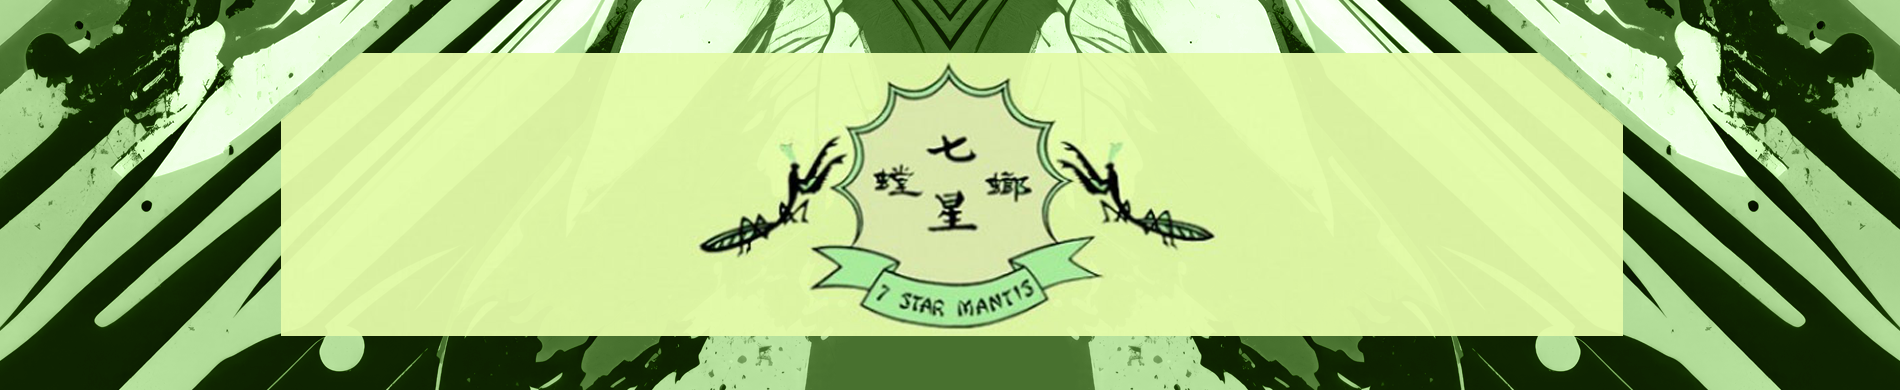 Northern Shaolin 7 Star Praying Mantis Association